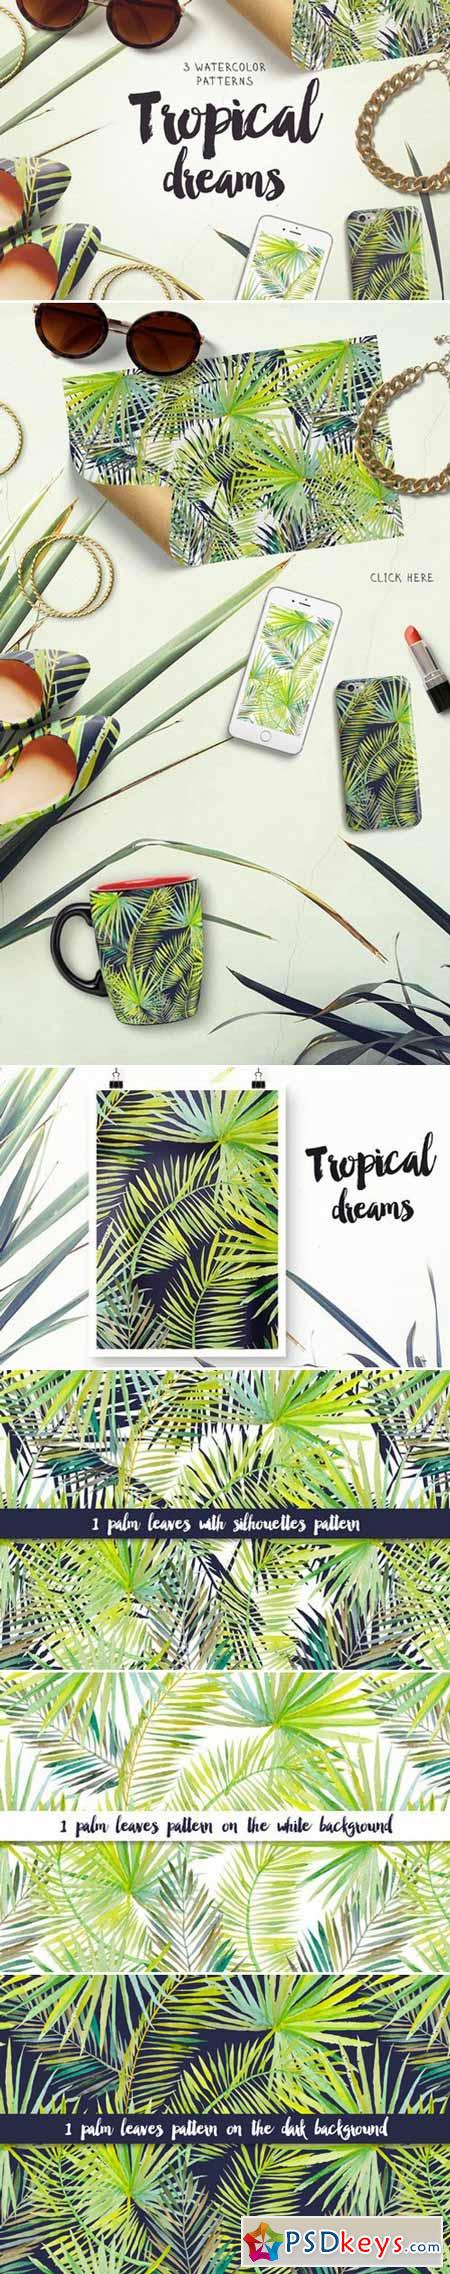 Tropical dreams patterns 478283